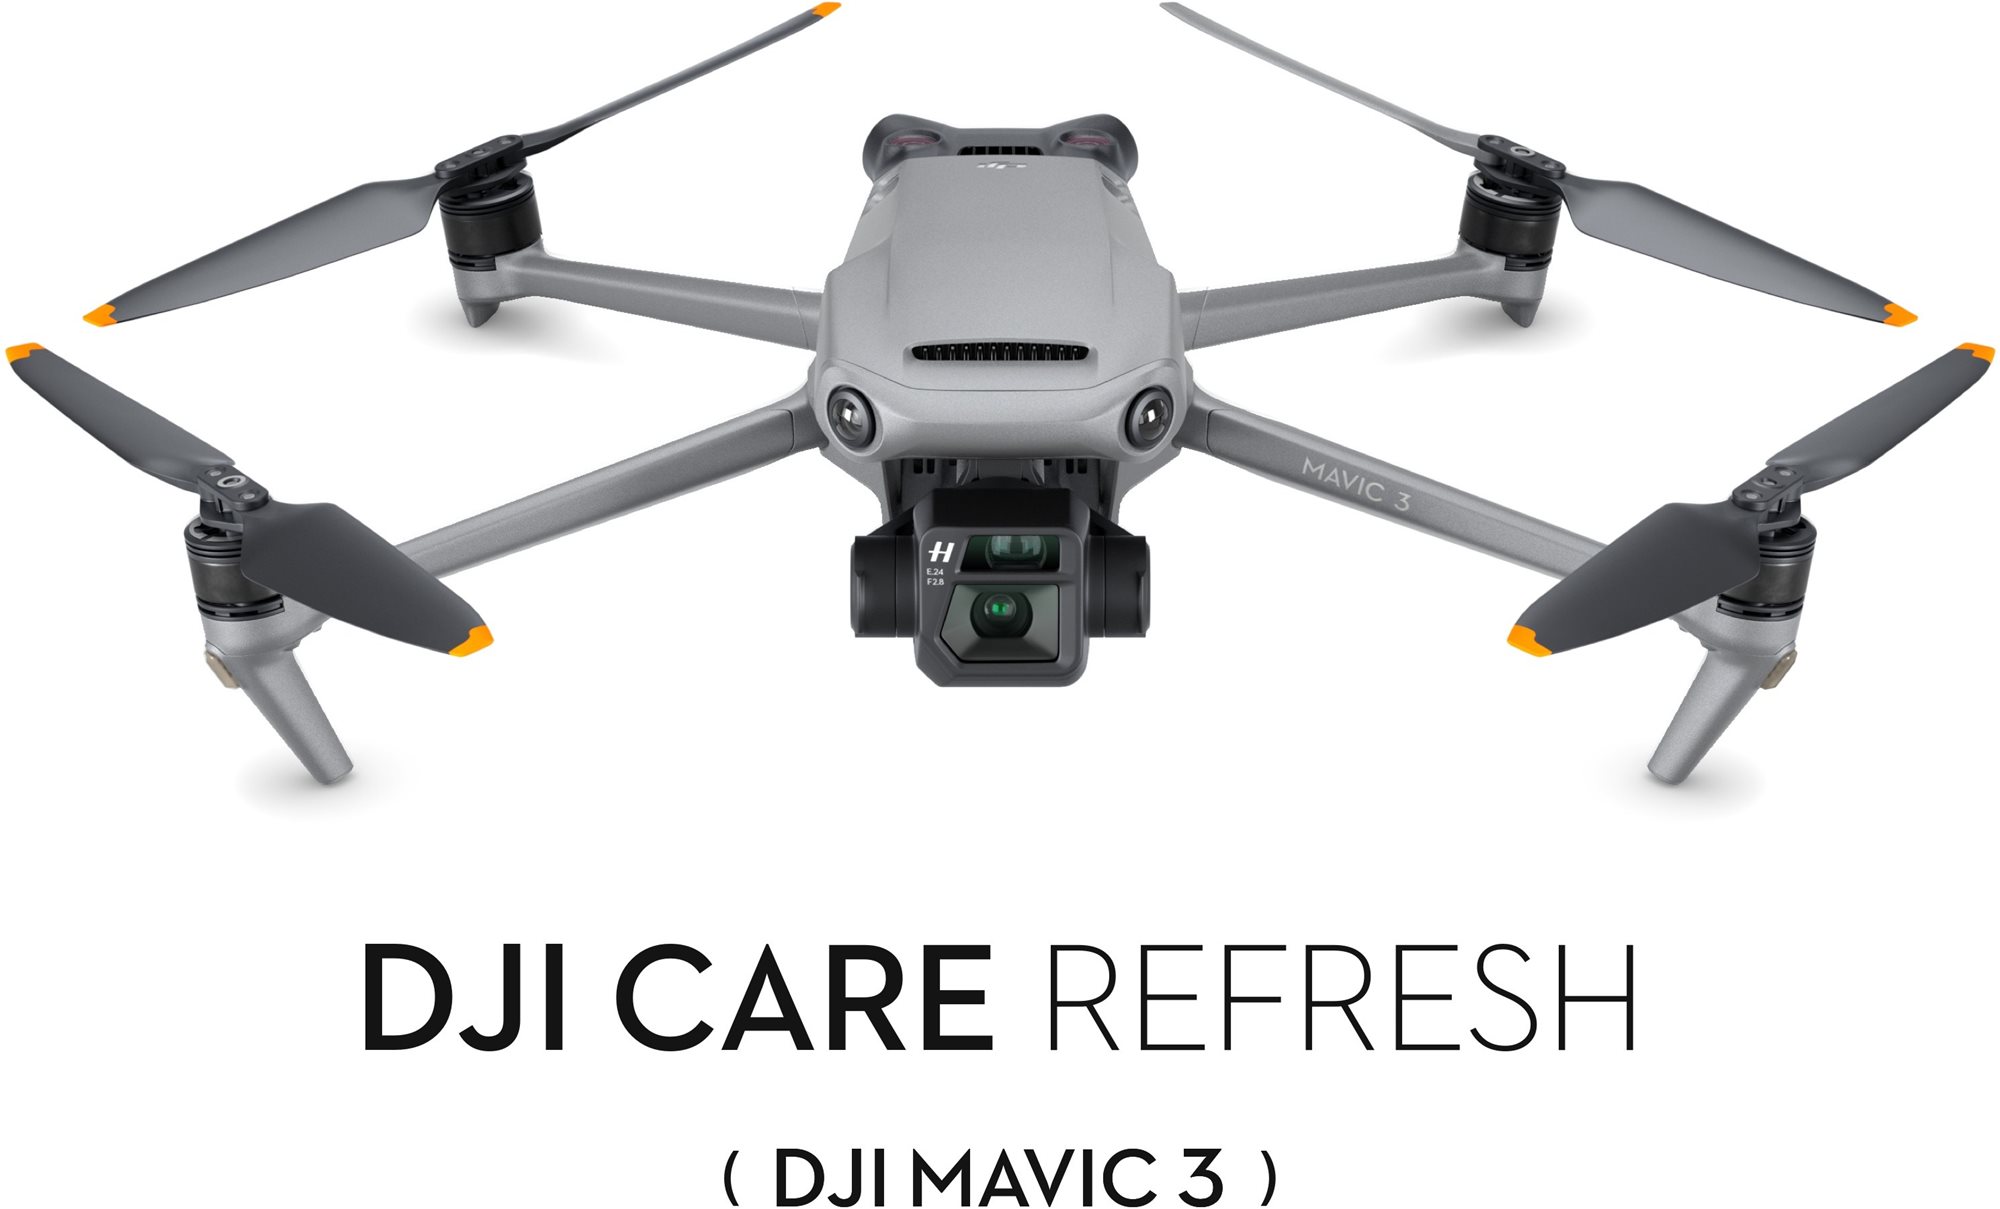 DJI Care Refresh 1-Year Plan (DJI Mavic 3)